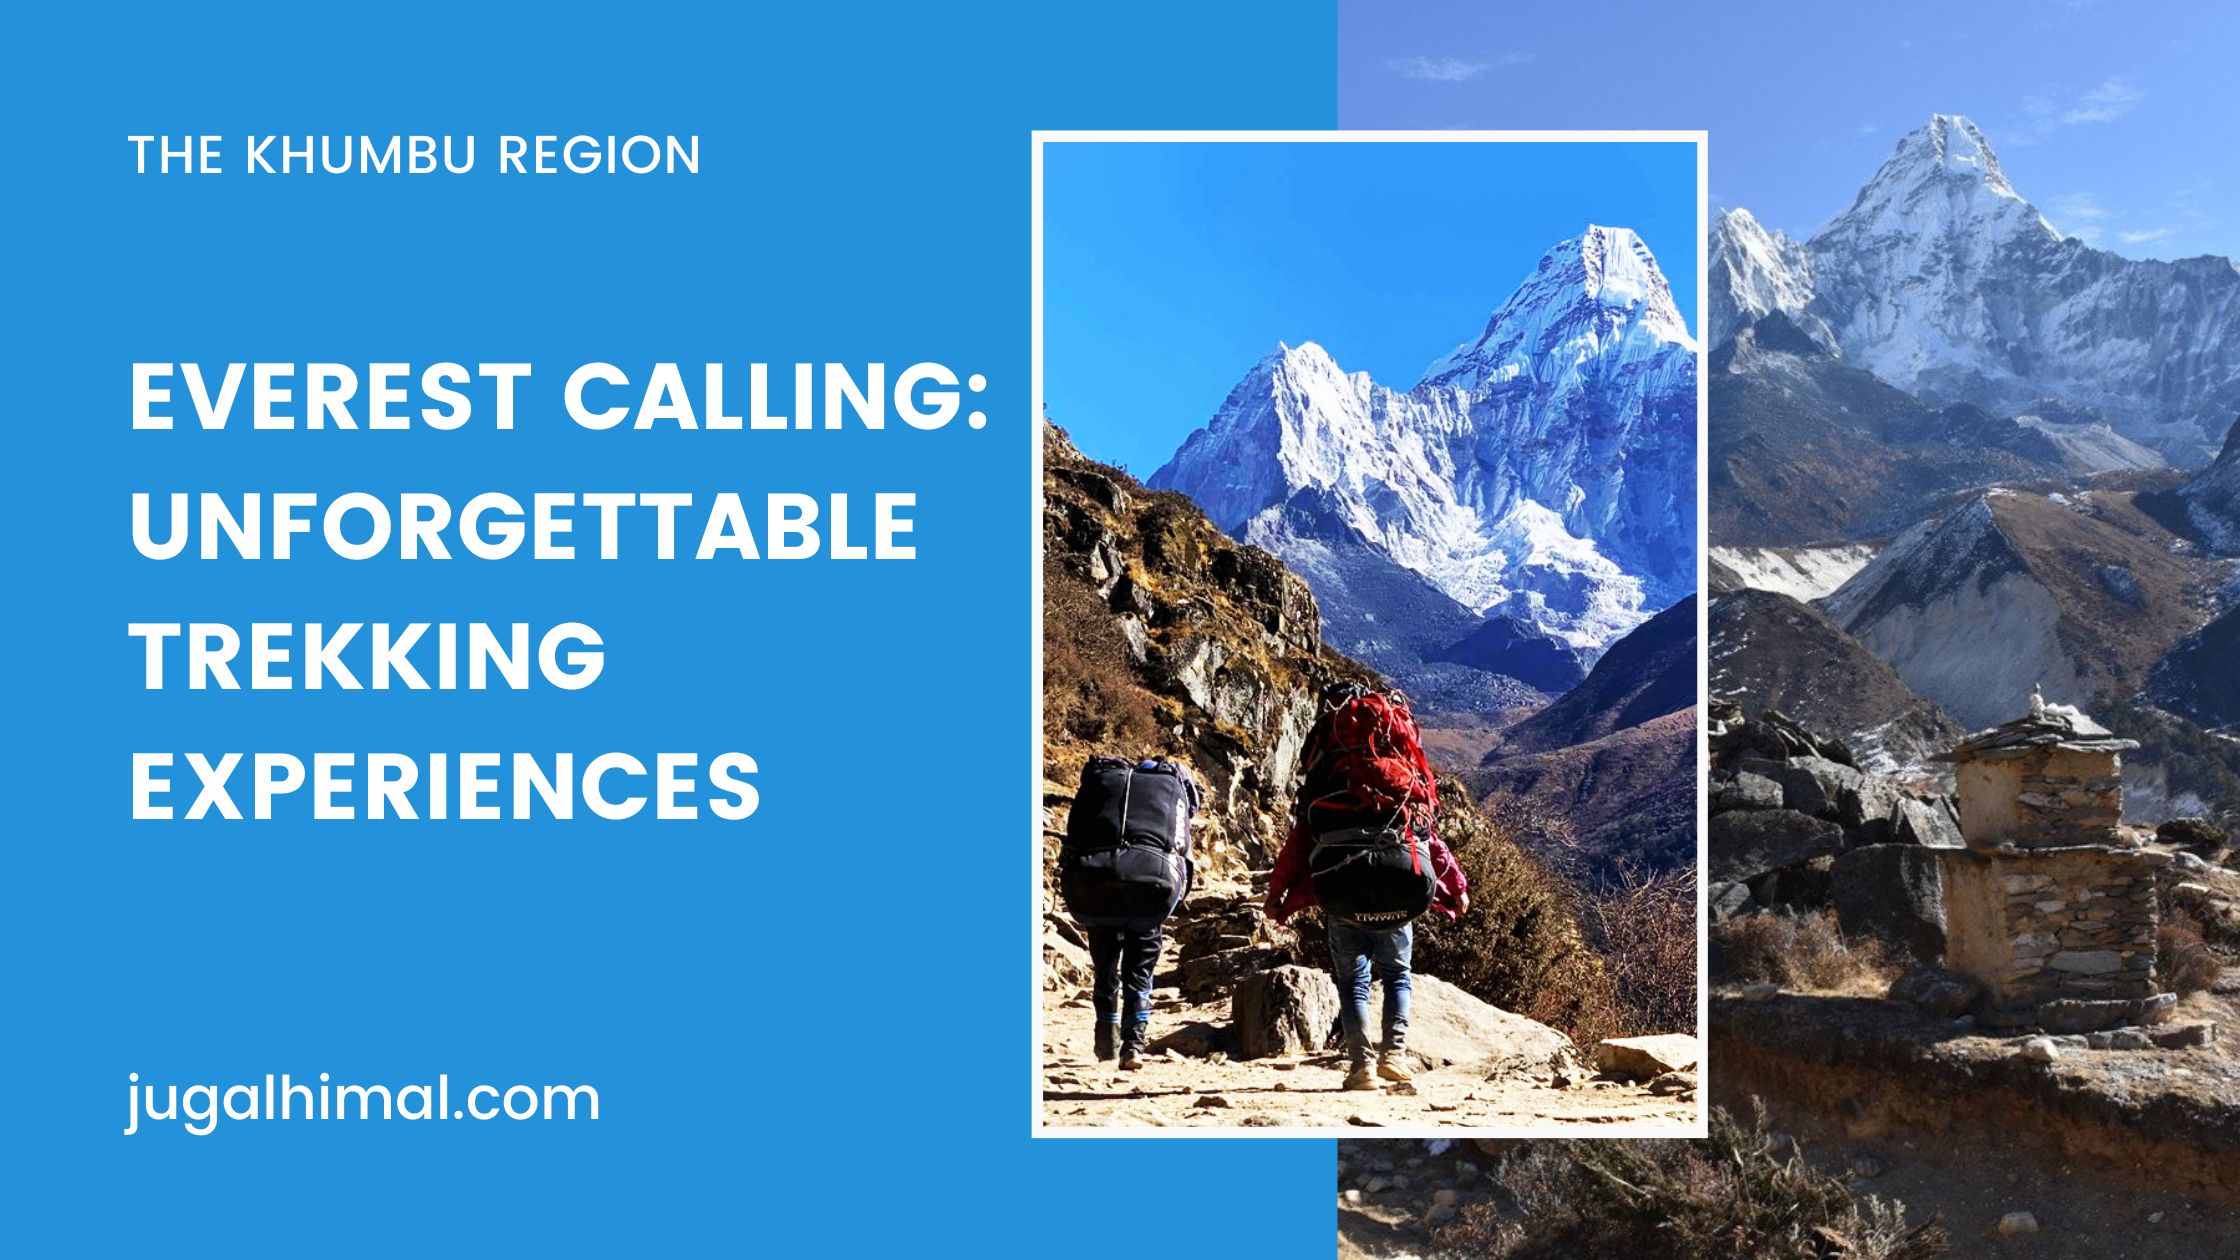 Everest Calling: Unforgettable Trekking Experiences in the Khumbu Region